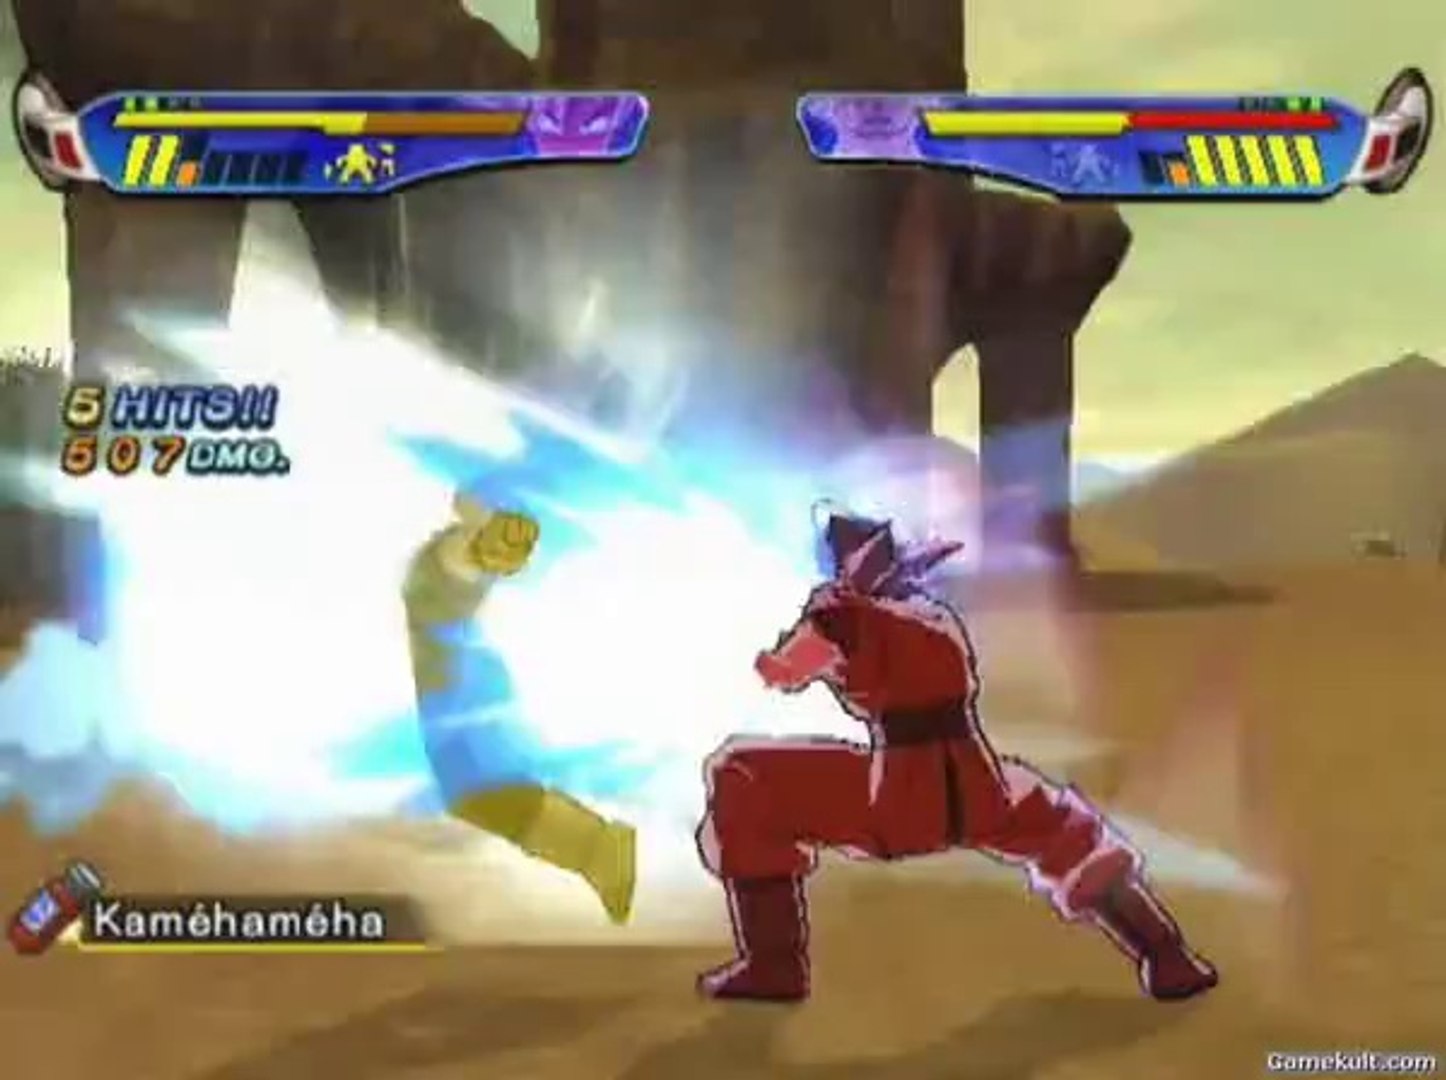 PlayStation 2 - Dragon Ball Z: Budokai Tenkaichi 3 - Goten - The